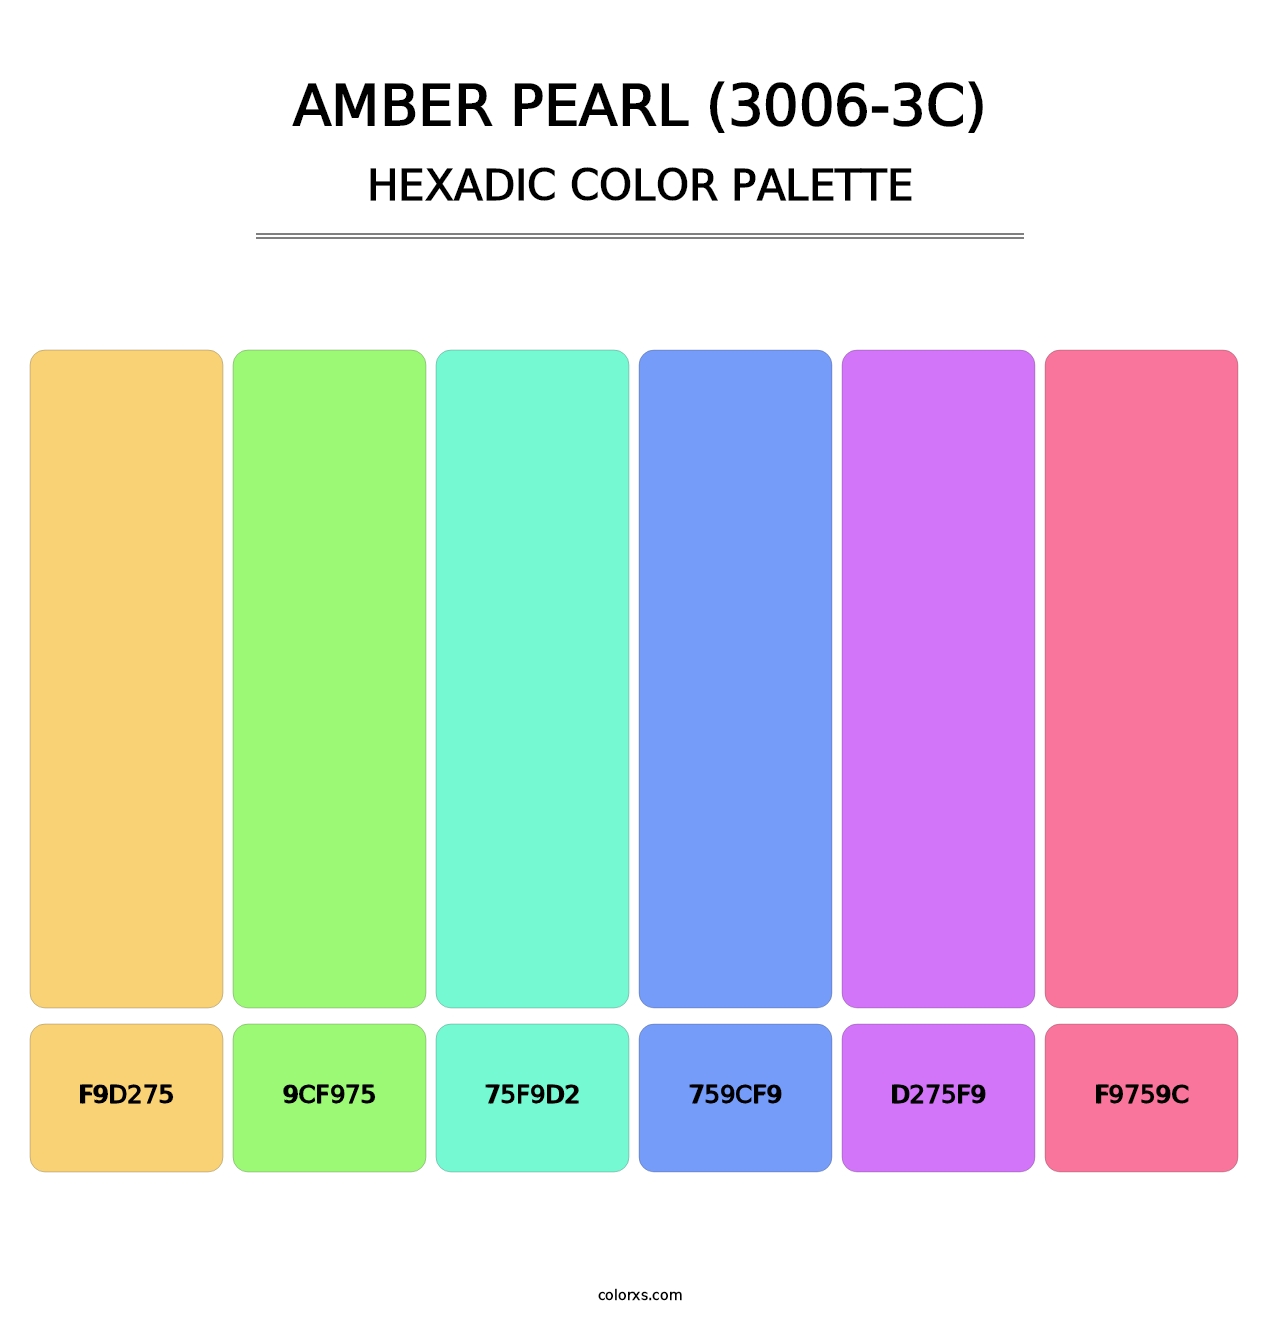 Amber Pearl (3006-3C) - Hexadic Color Palette